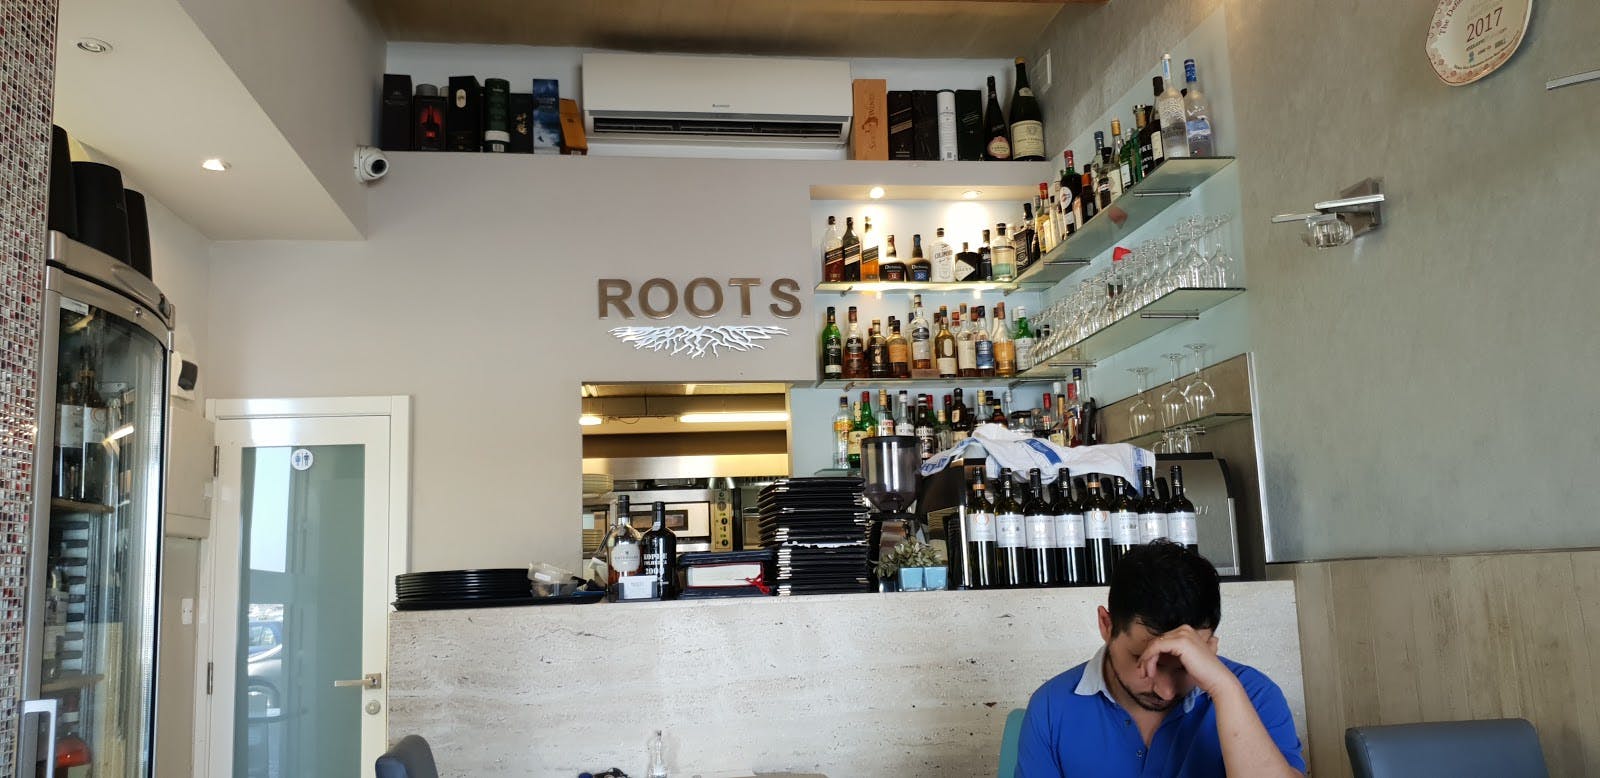 Image - Roots Restaurant